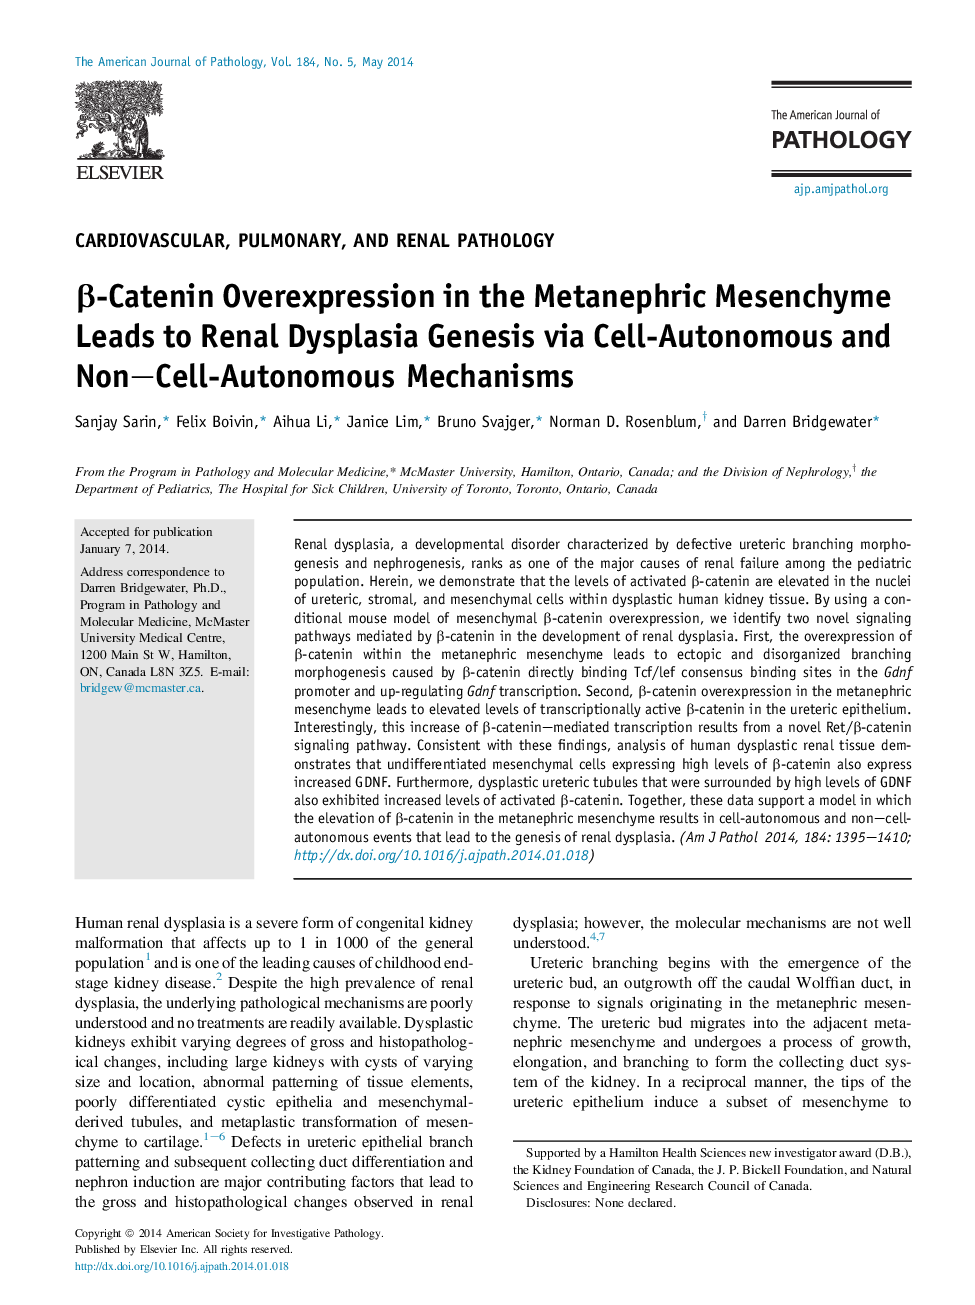 Î²-Catenin Overexpression in the Metanephric Mesenchyme Leads to Renal Dysplasia Genesis via Cell-Autonomous and Non-Cell-Autonomous Mechanisms